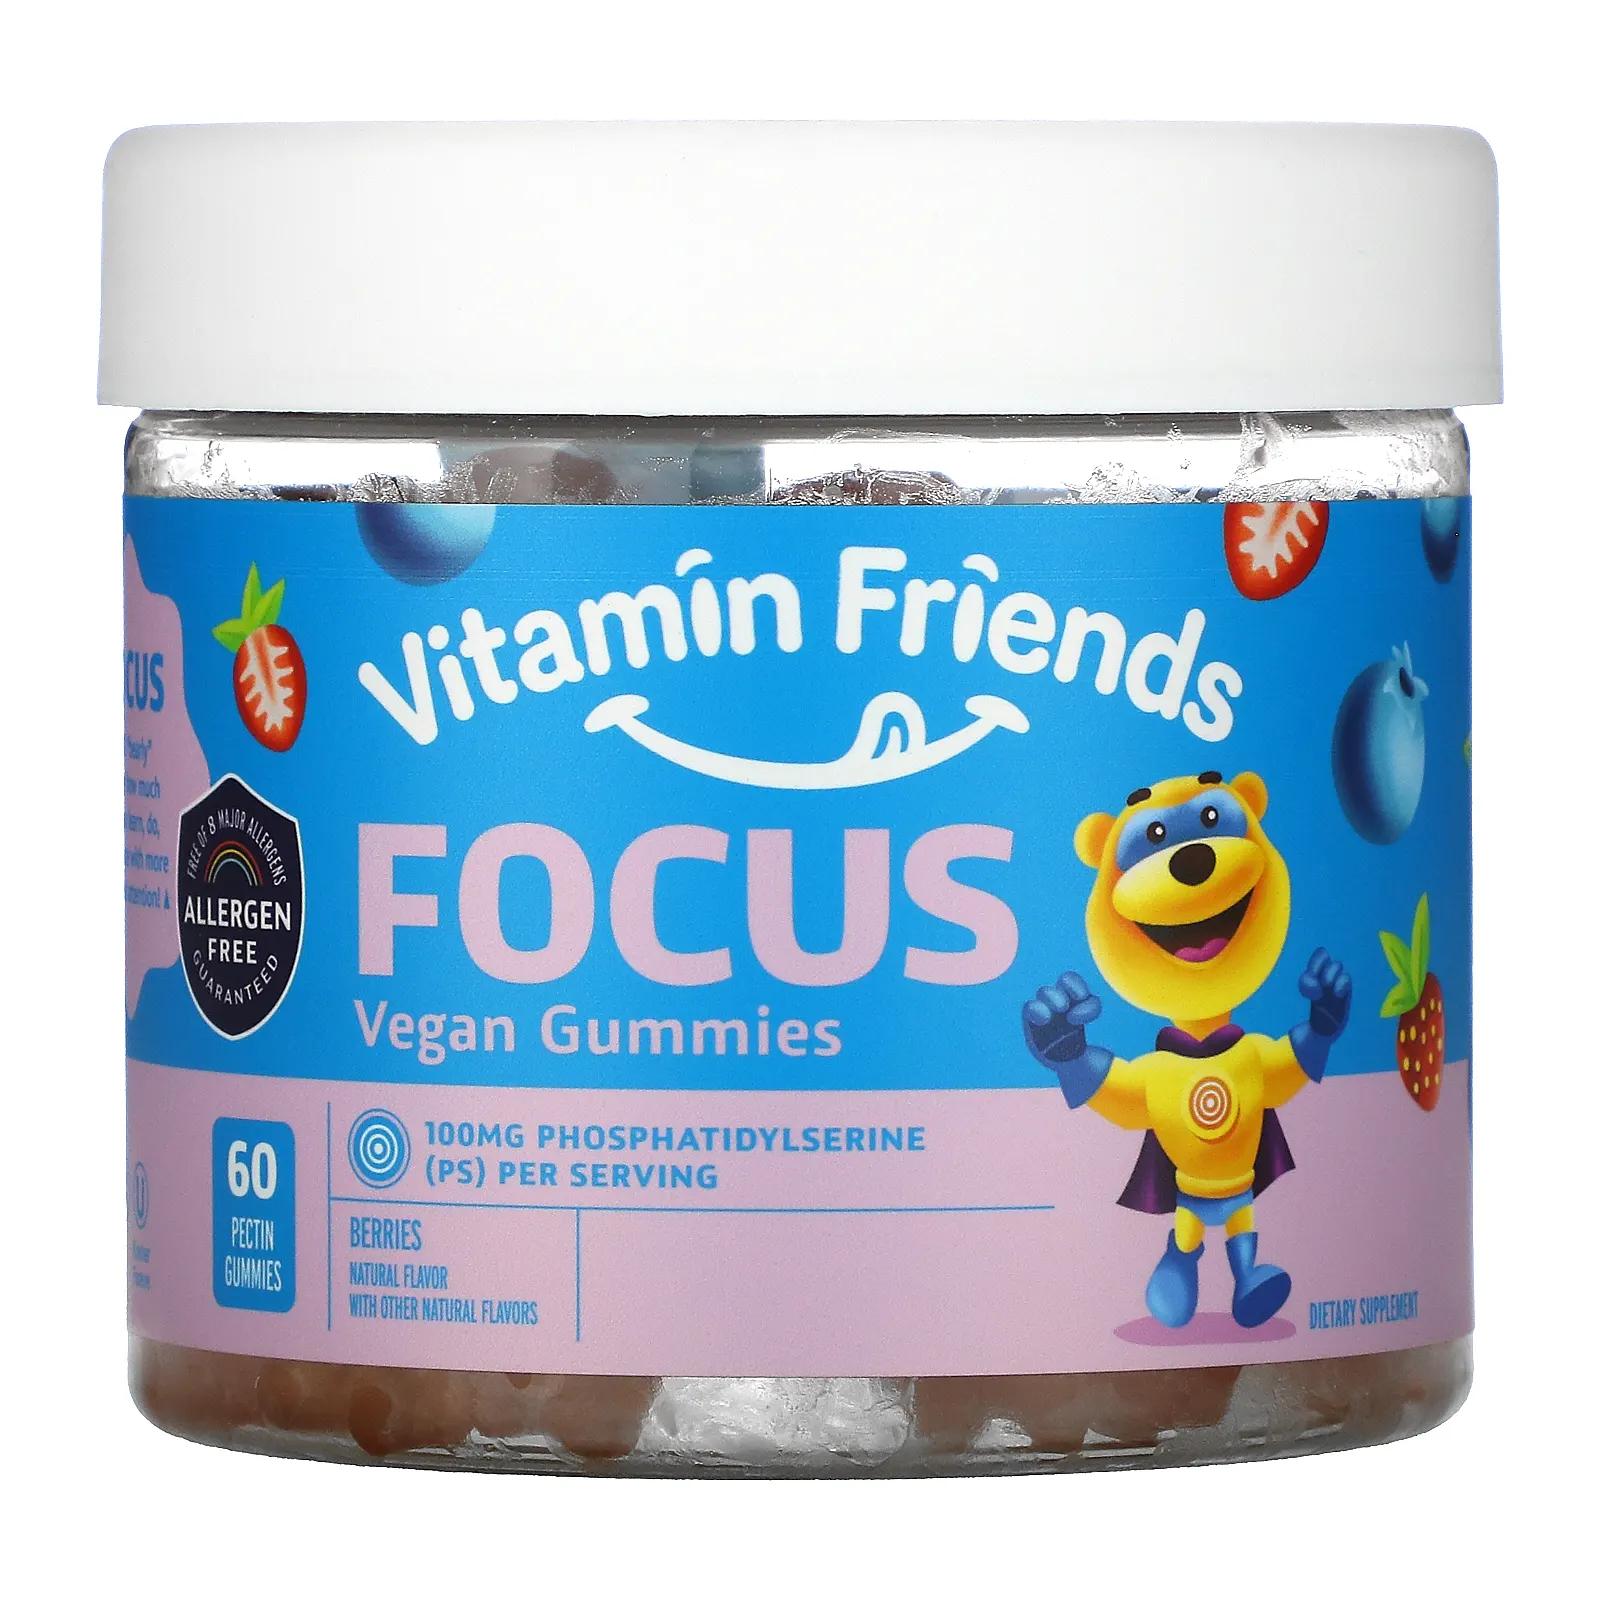 Vitamin Friends Just Focus Vegan Gummies Berry Flavor 60 Pectin Gummies